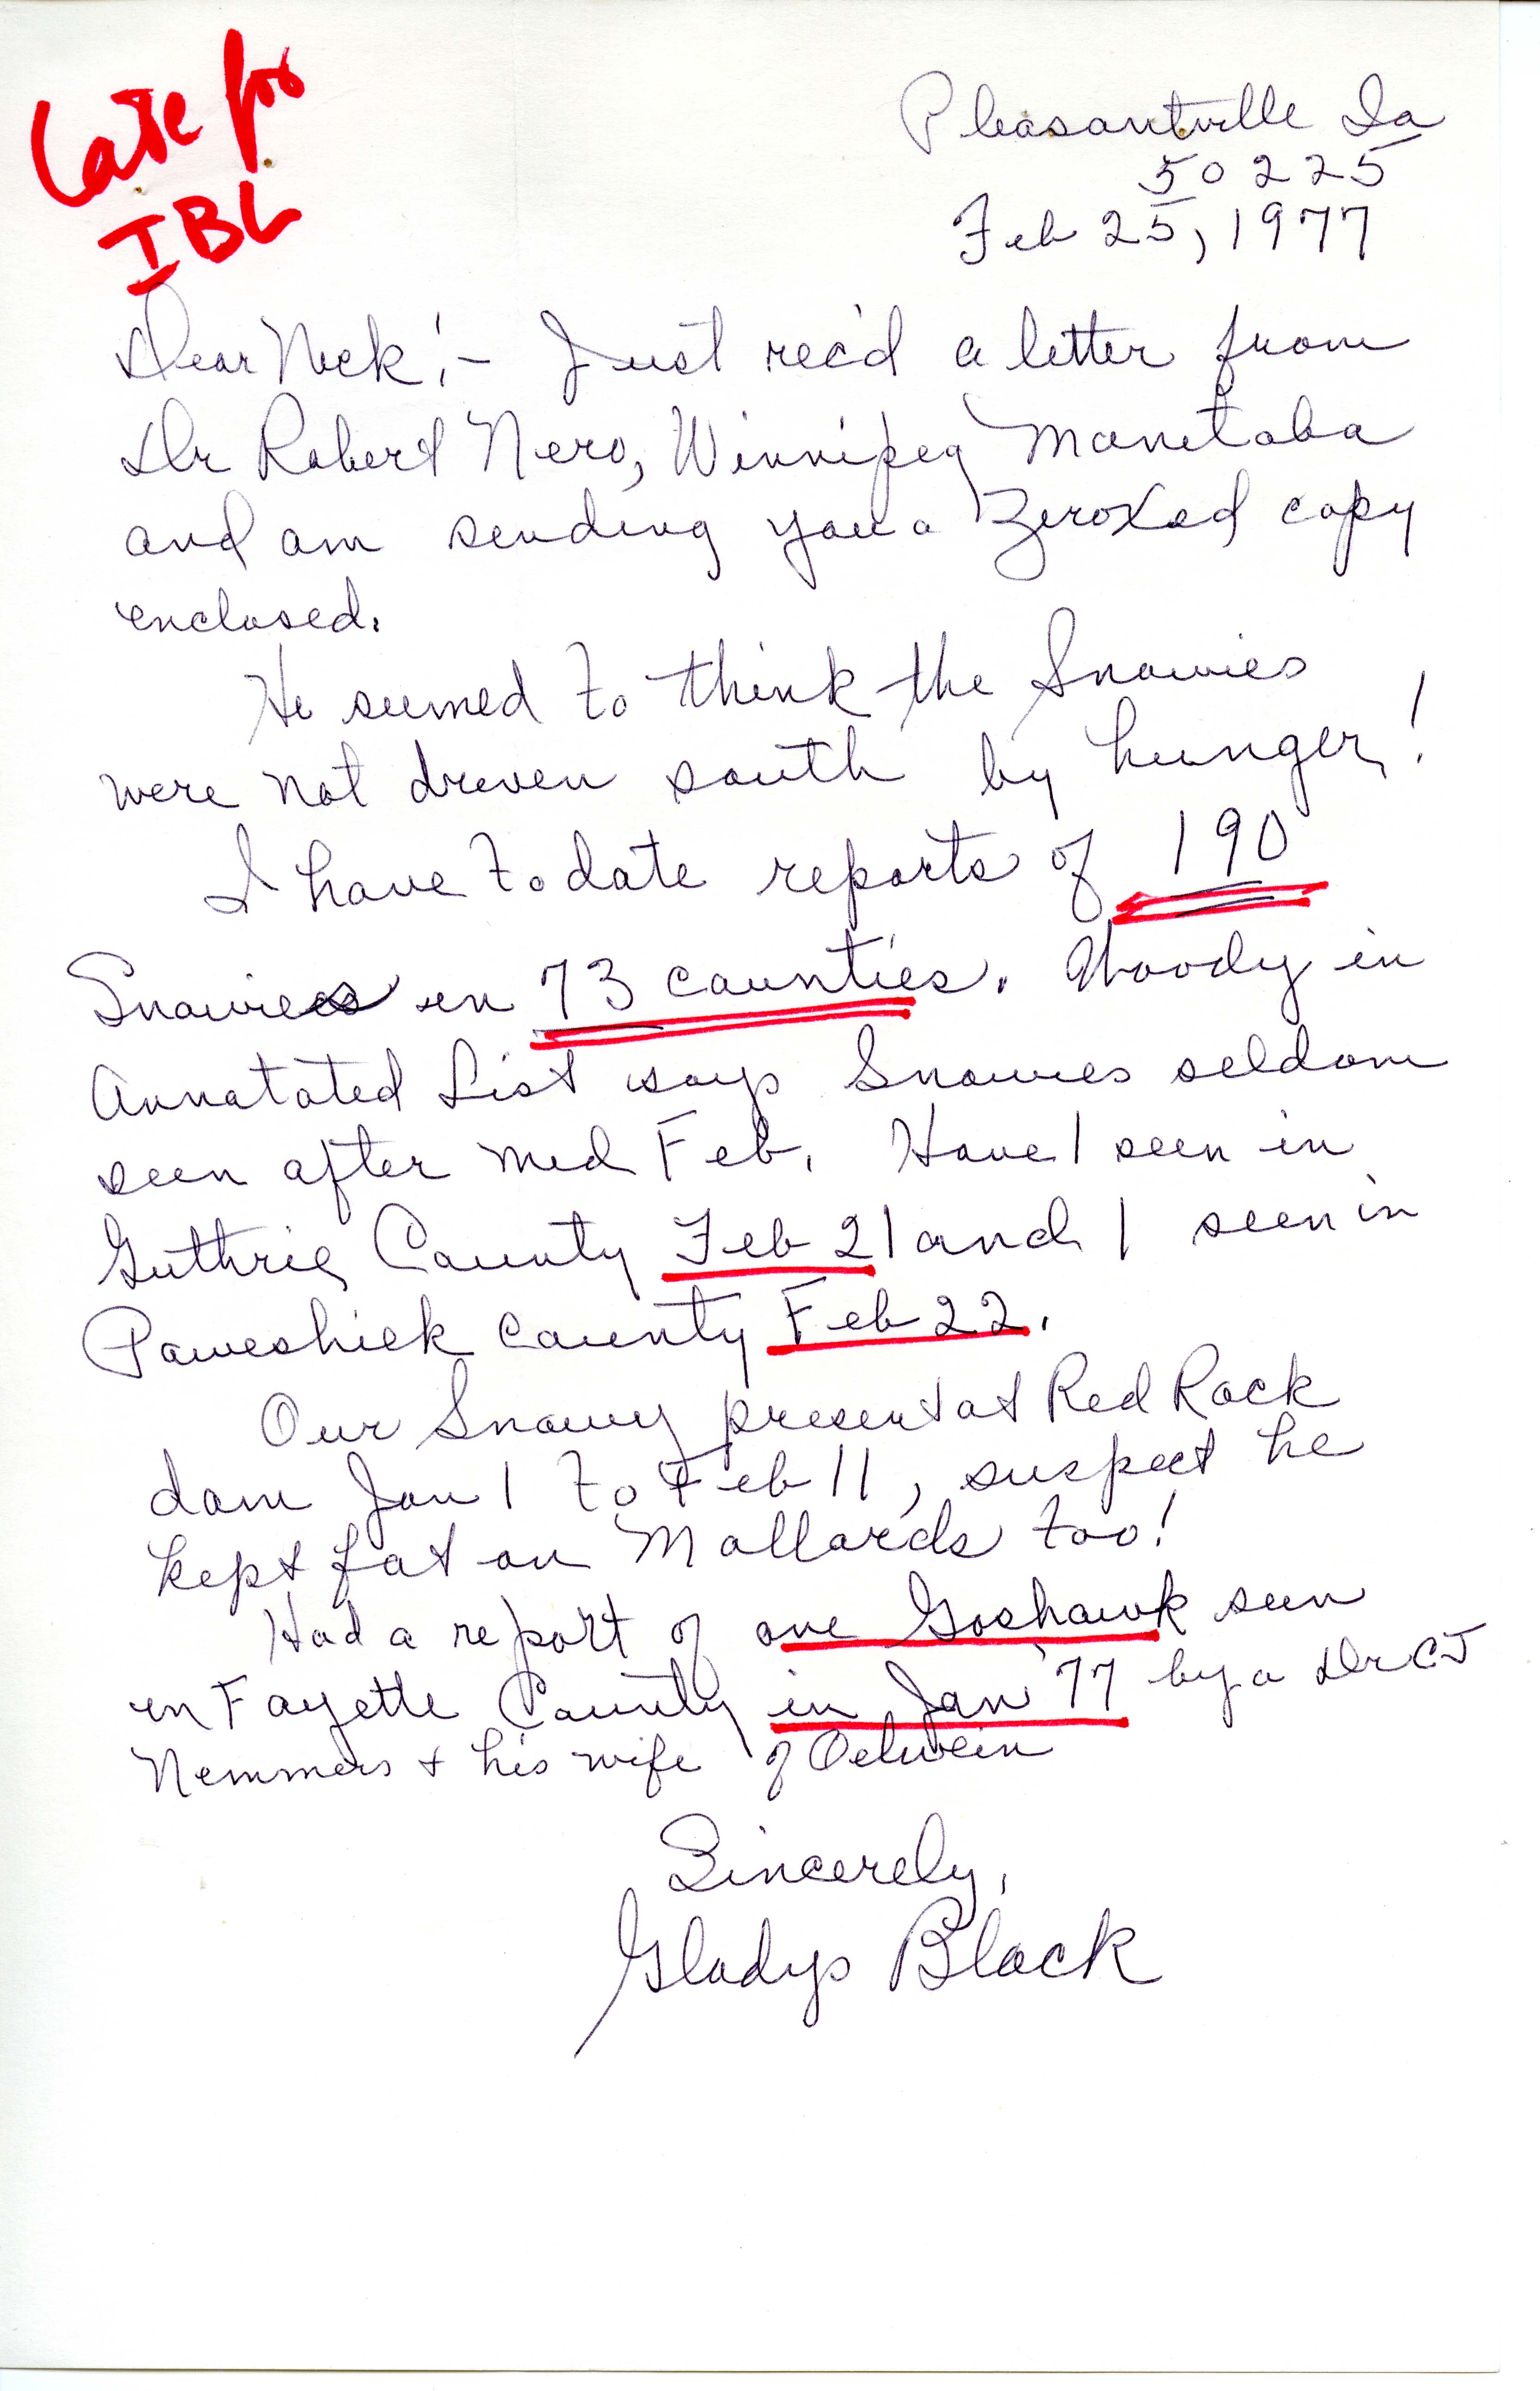 Gladys Black letter to Nicholas S. Halmi regarding sightings of Snowy Owls and a Goshawk, February 25, 1977 